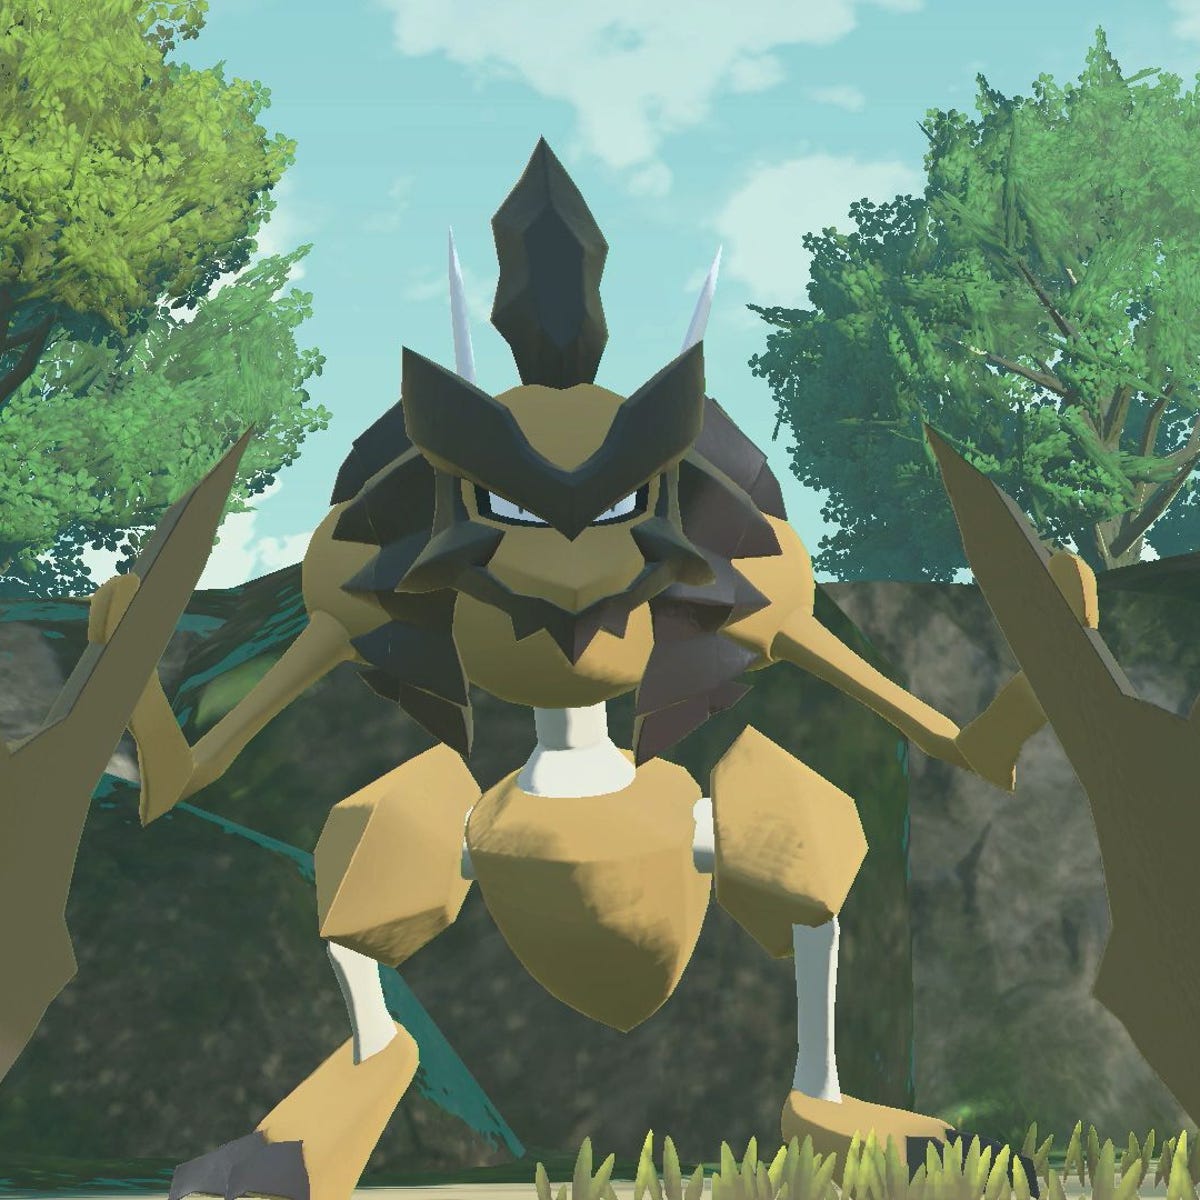 Pokemon Legends: Arceus - How to Evolve Scyther, Hisuian Growlithe